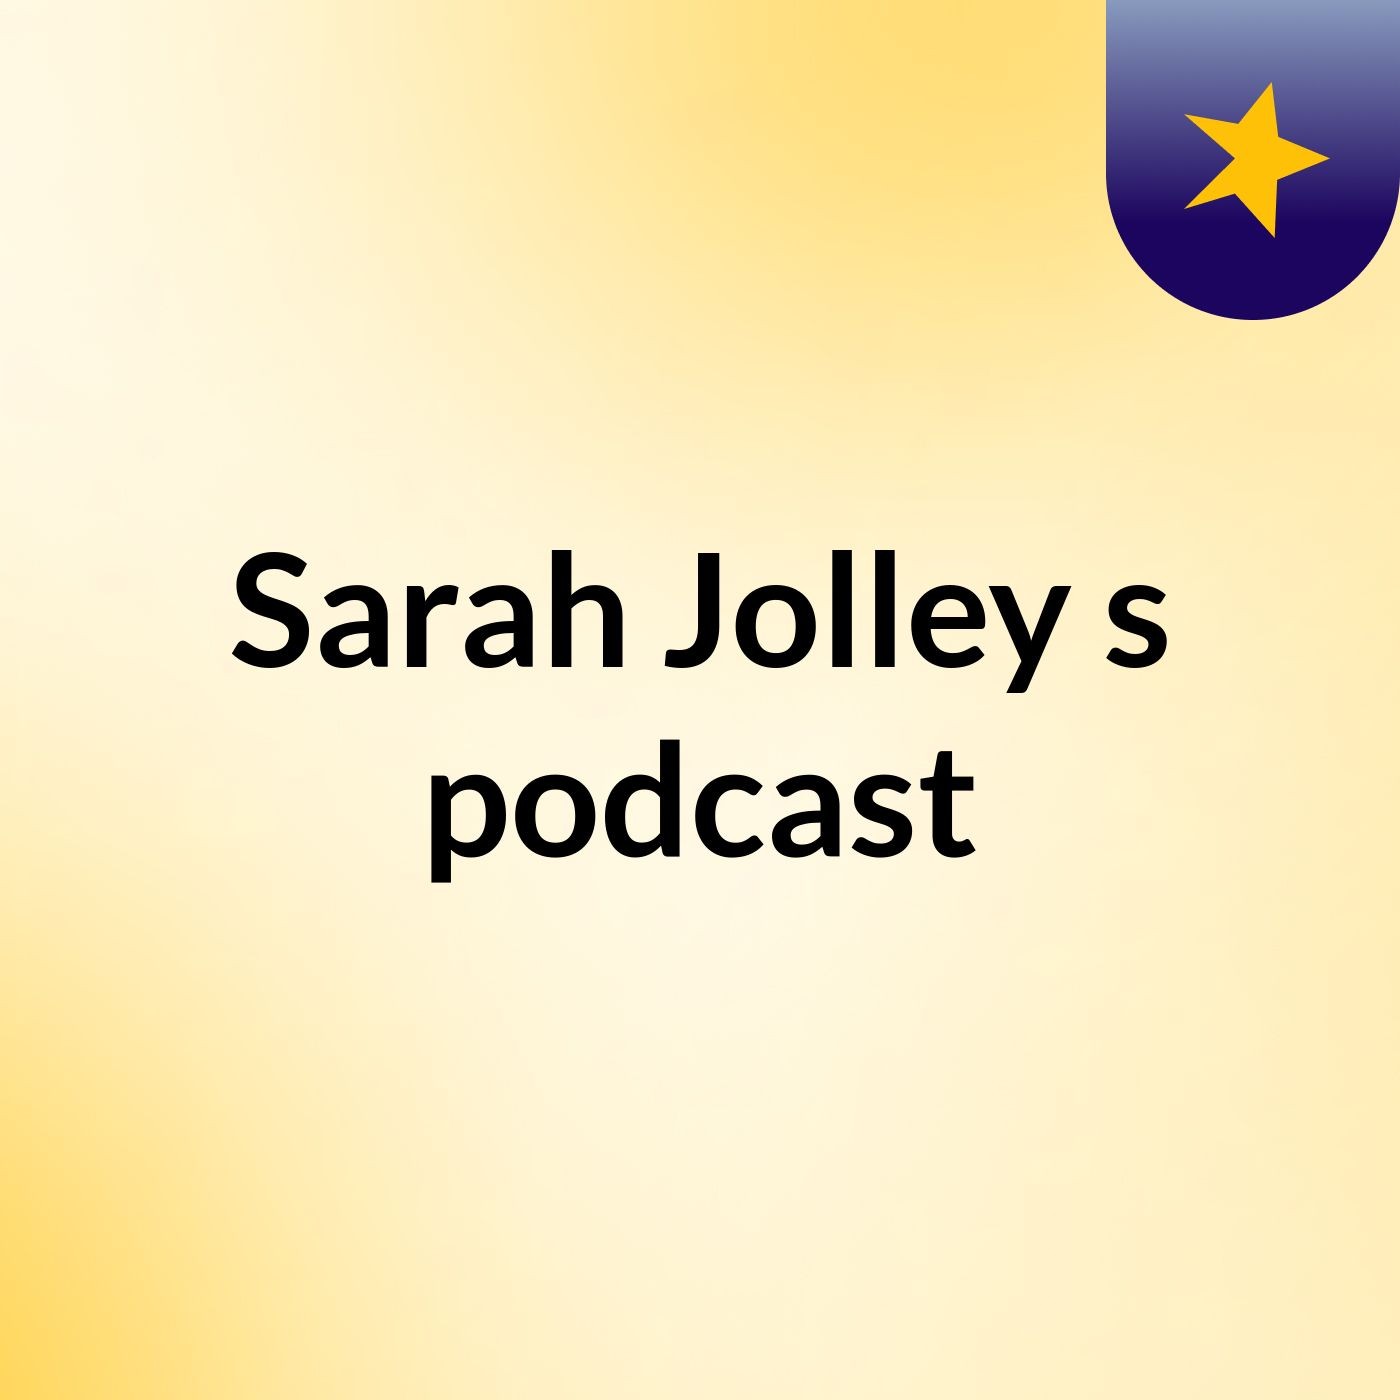 Episode 3 - Sarah Jolley's podcast